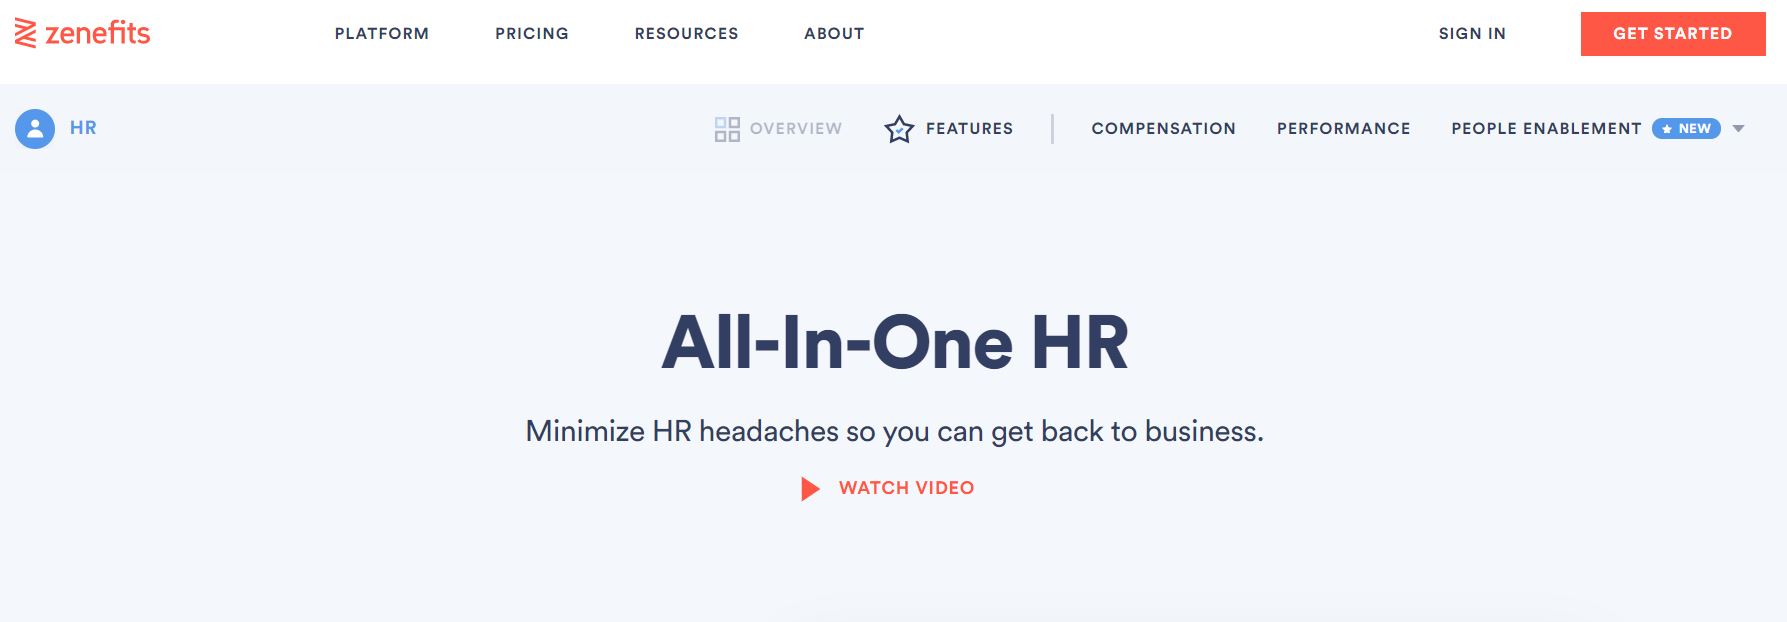 Zenefits HR solution homepage.